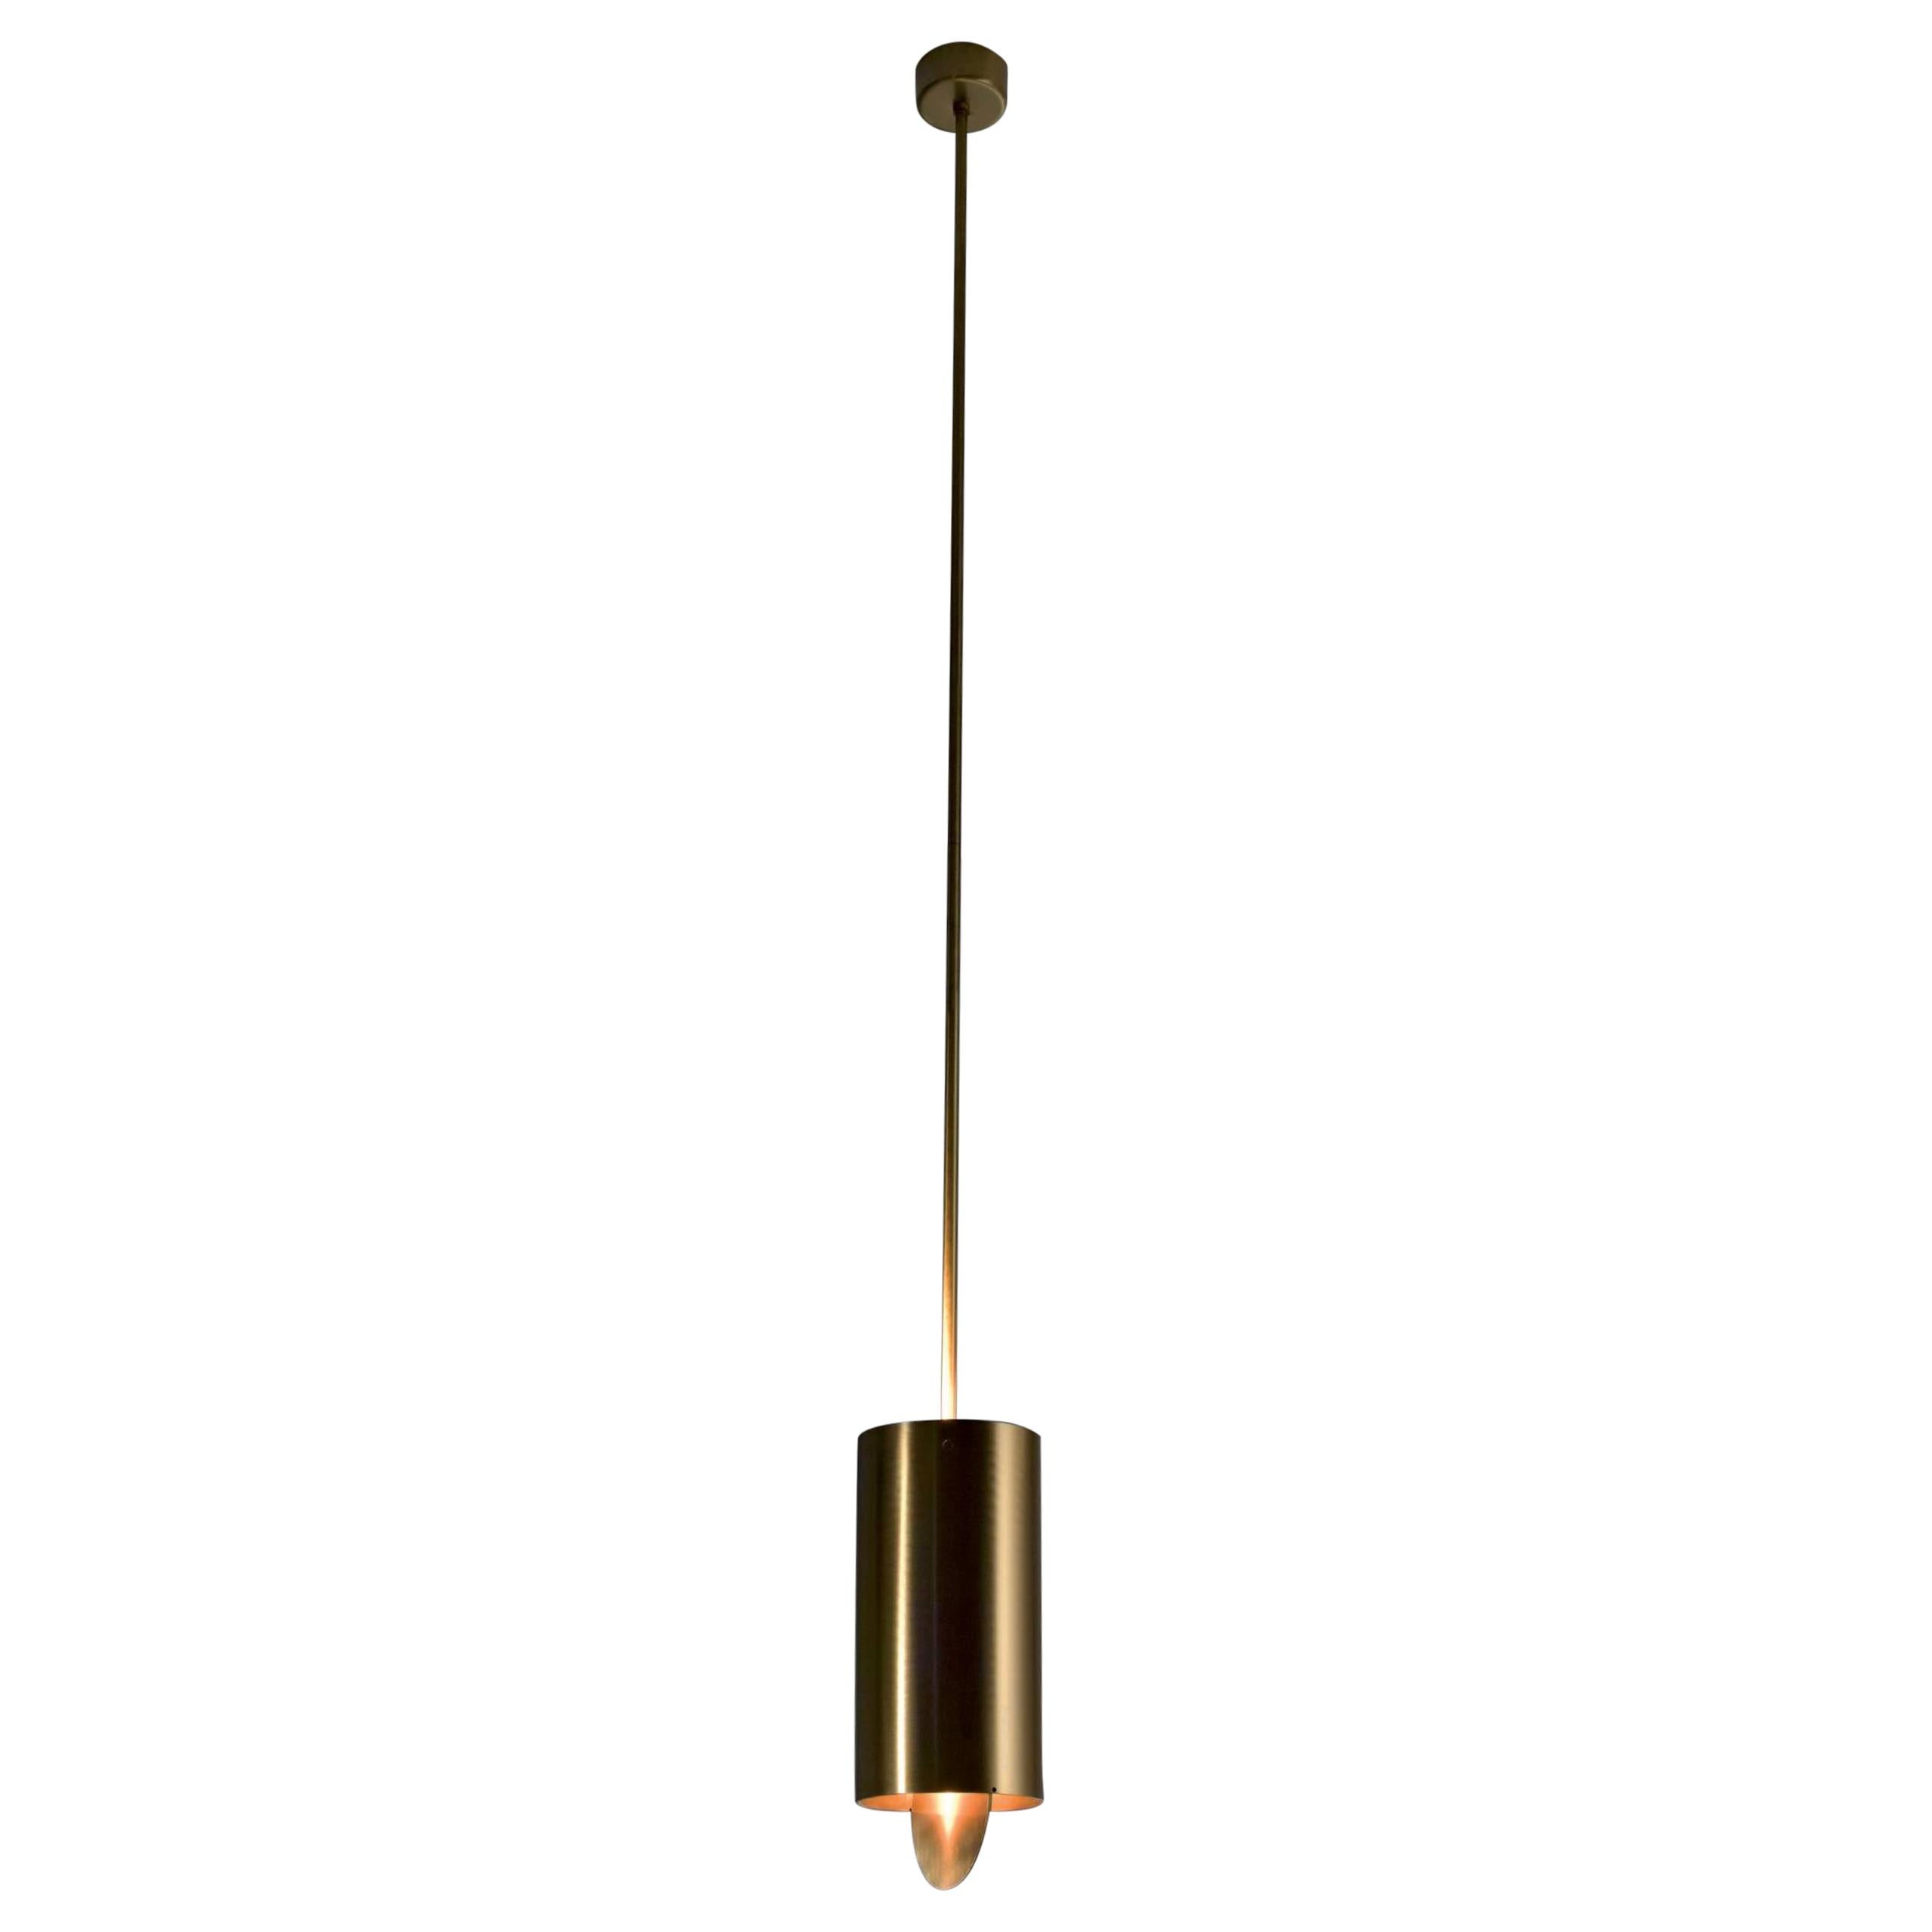 Laurameroni "Tubo Sospensione MF 40" modern Ceiling Pendant Lamp in satin brass